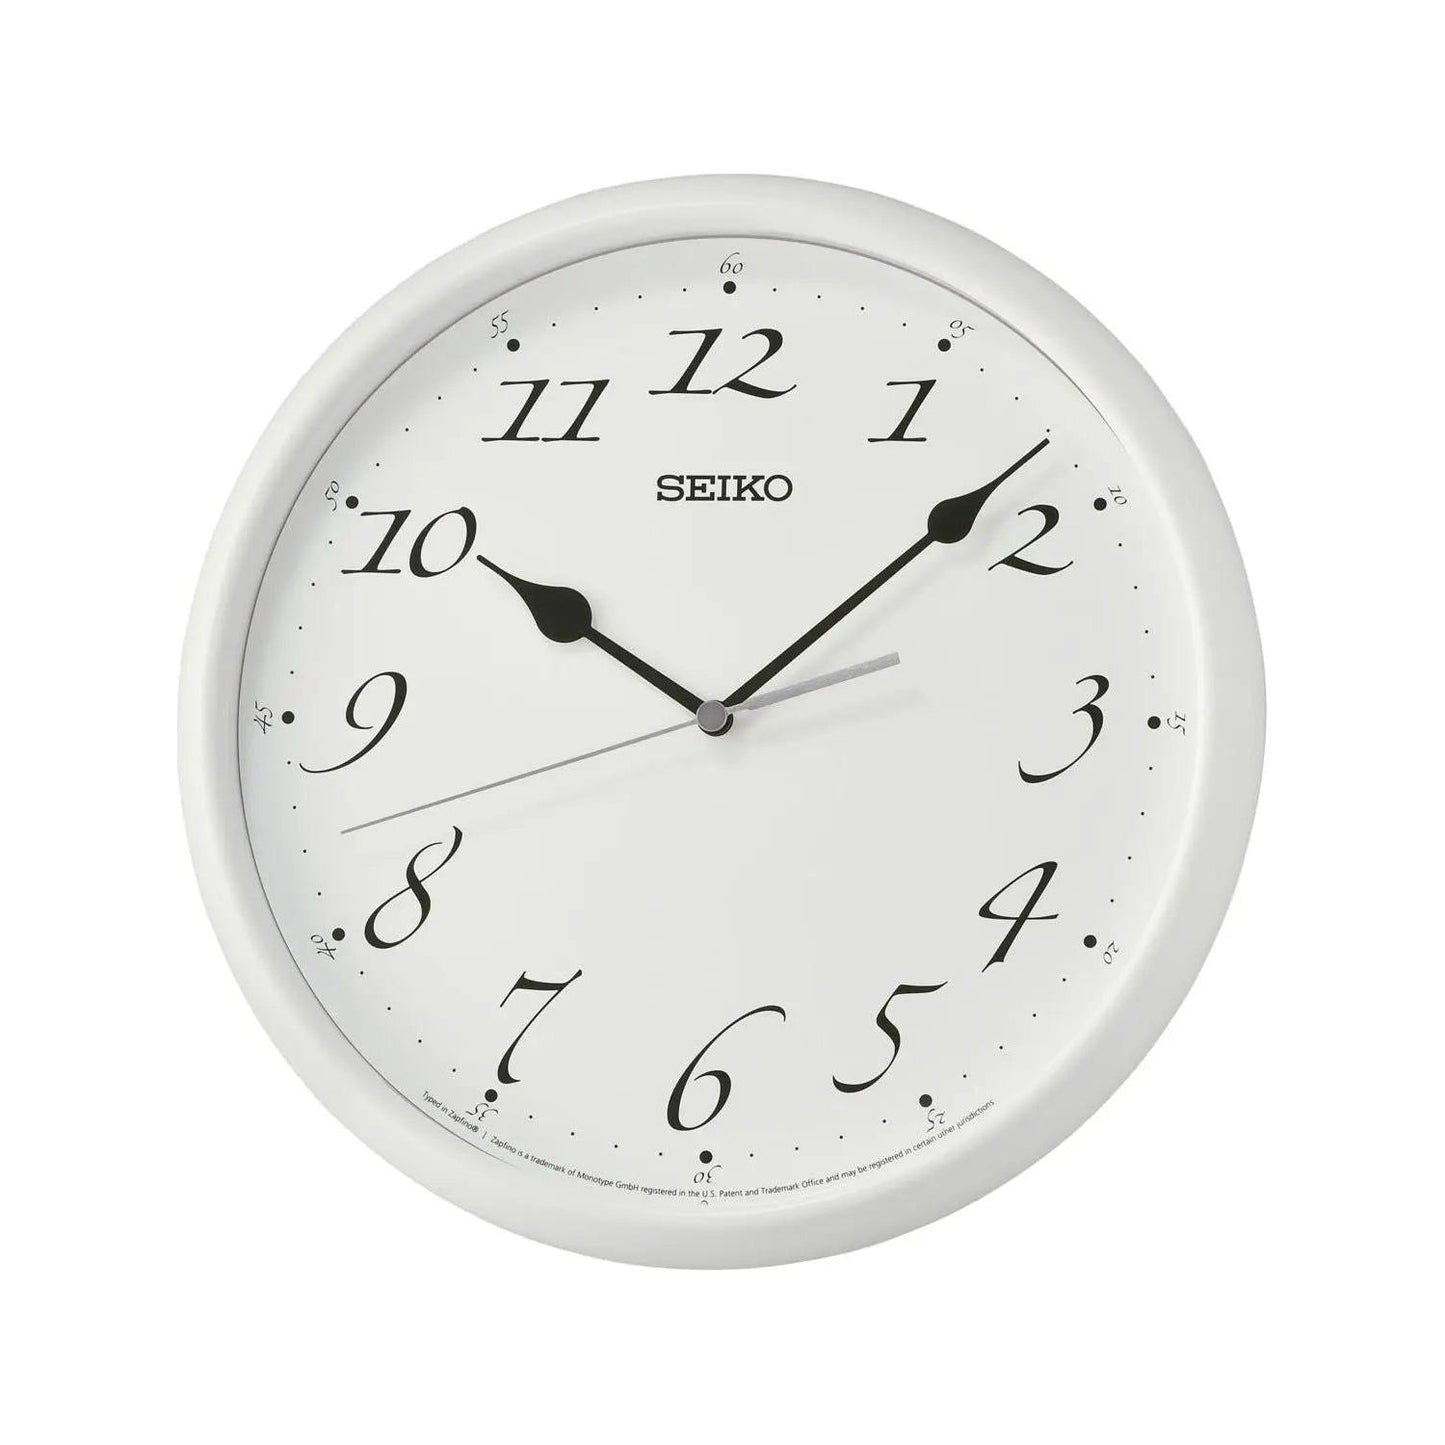 SEIKO CLOCKS SEIKO CLOCKS WATCHES Mod. QXA796W WATCHES seiko-clocks-watches-mod-qxa796w